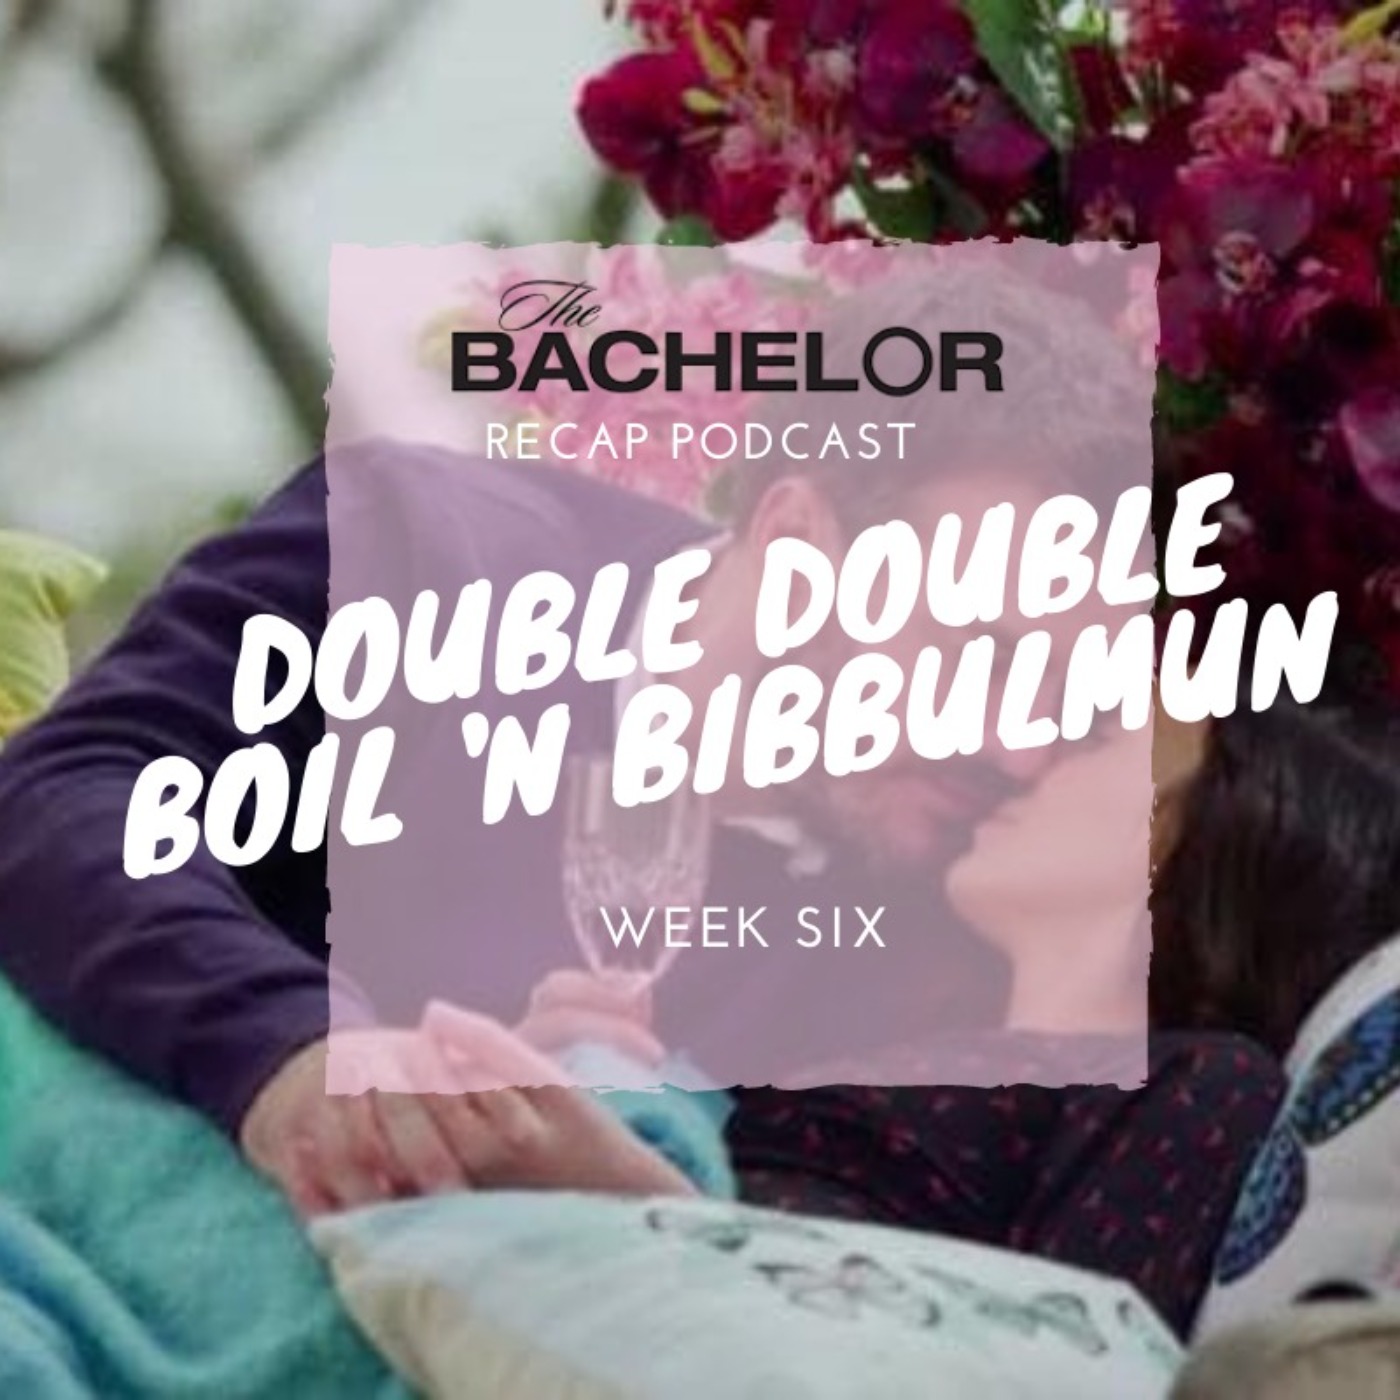 THE BACHELOR week 6: Double Double Boil ’n Bibbulmun